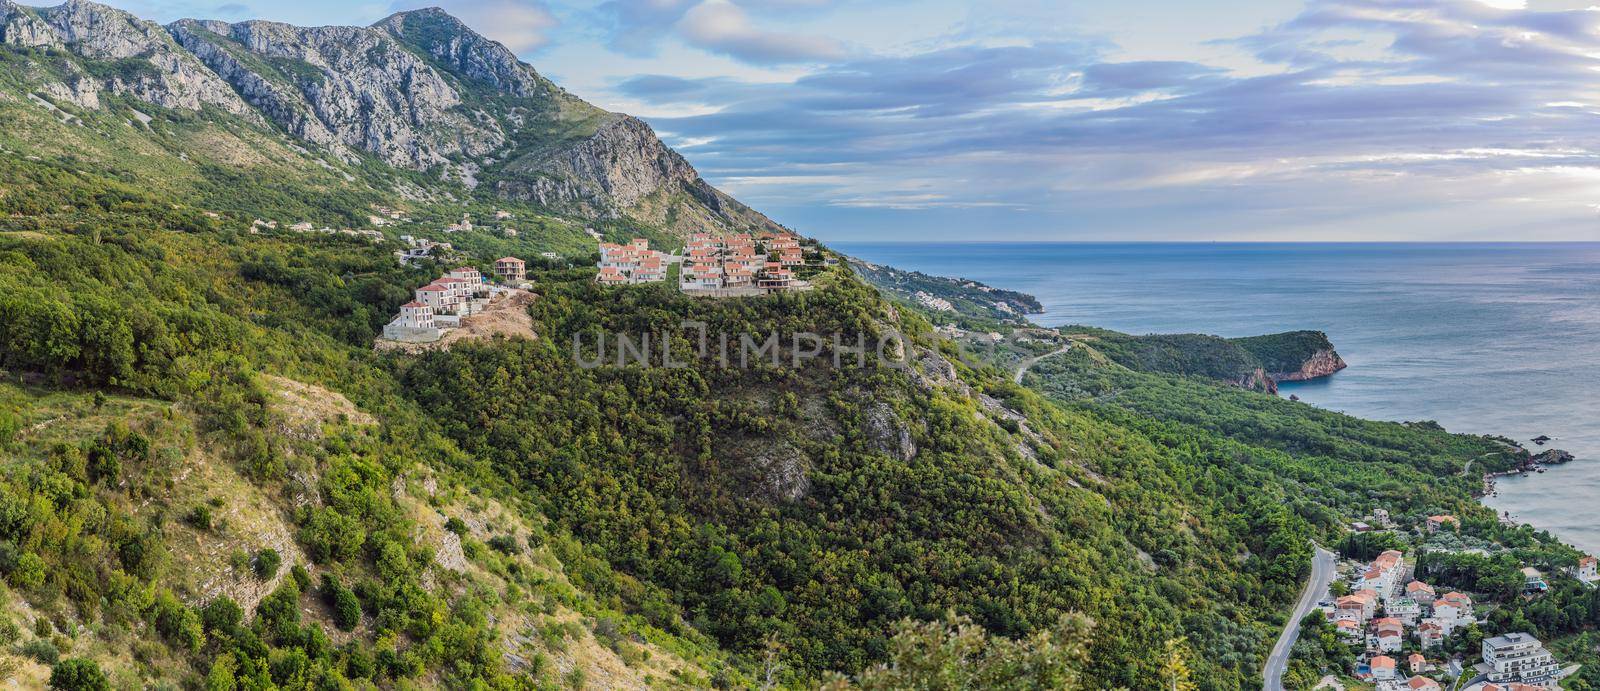 Mountains in Montenegro near the resort town of Budva.